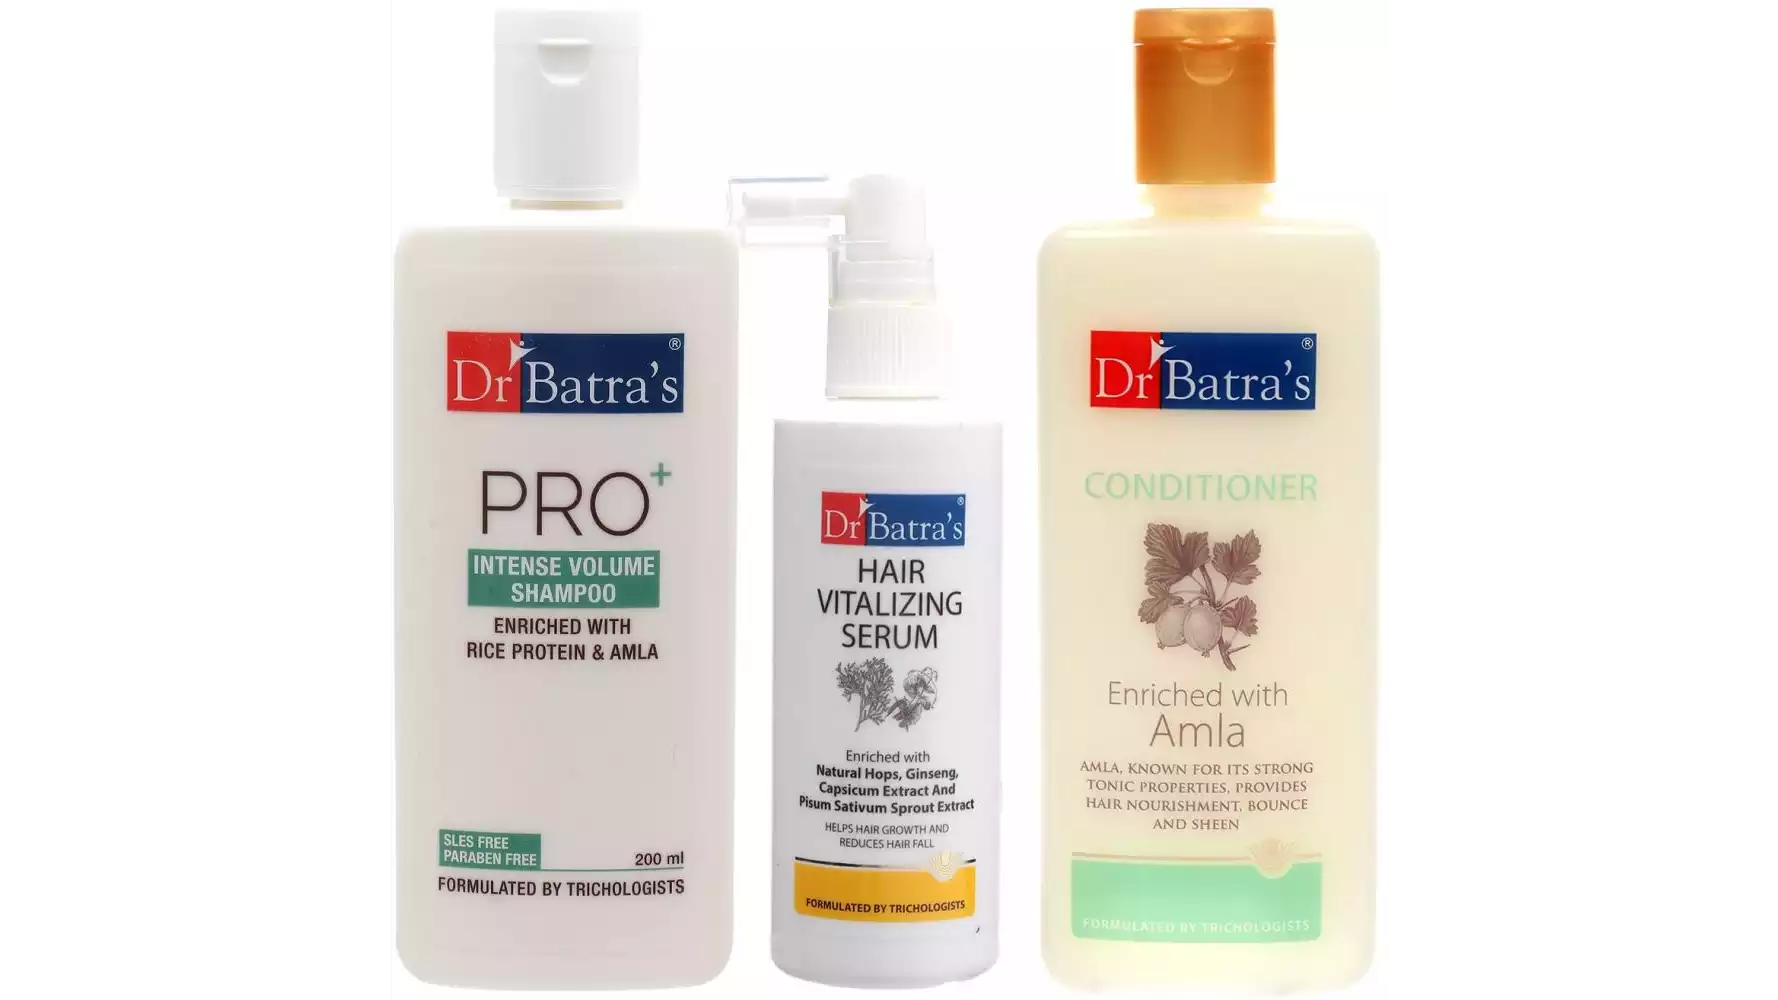 Dr Batras Pro Plus Intense Volume Shampoo, Conditioner & Hair Vitalizing Serum Combo (1Pack)